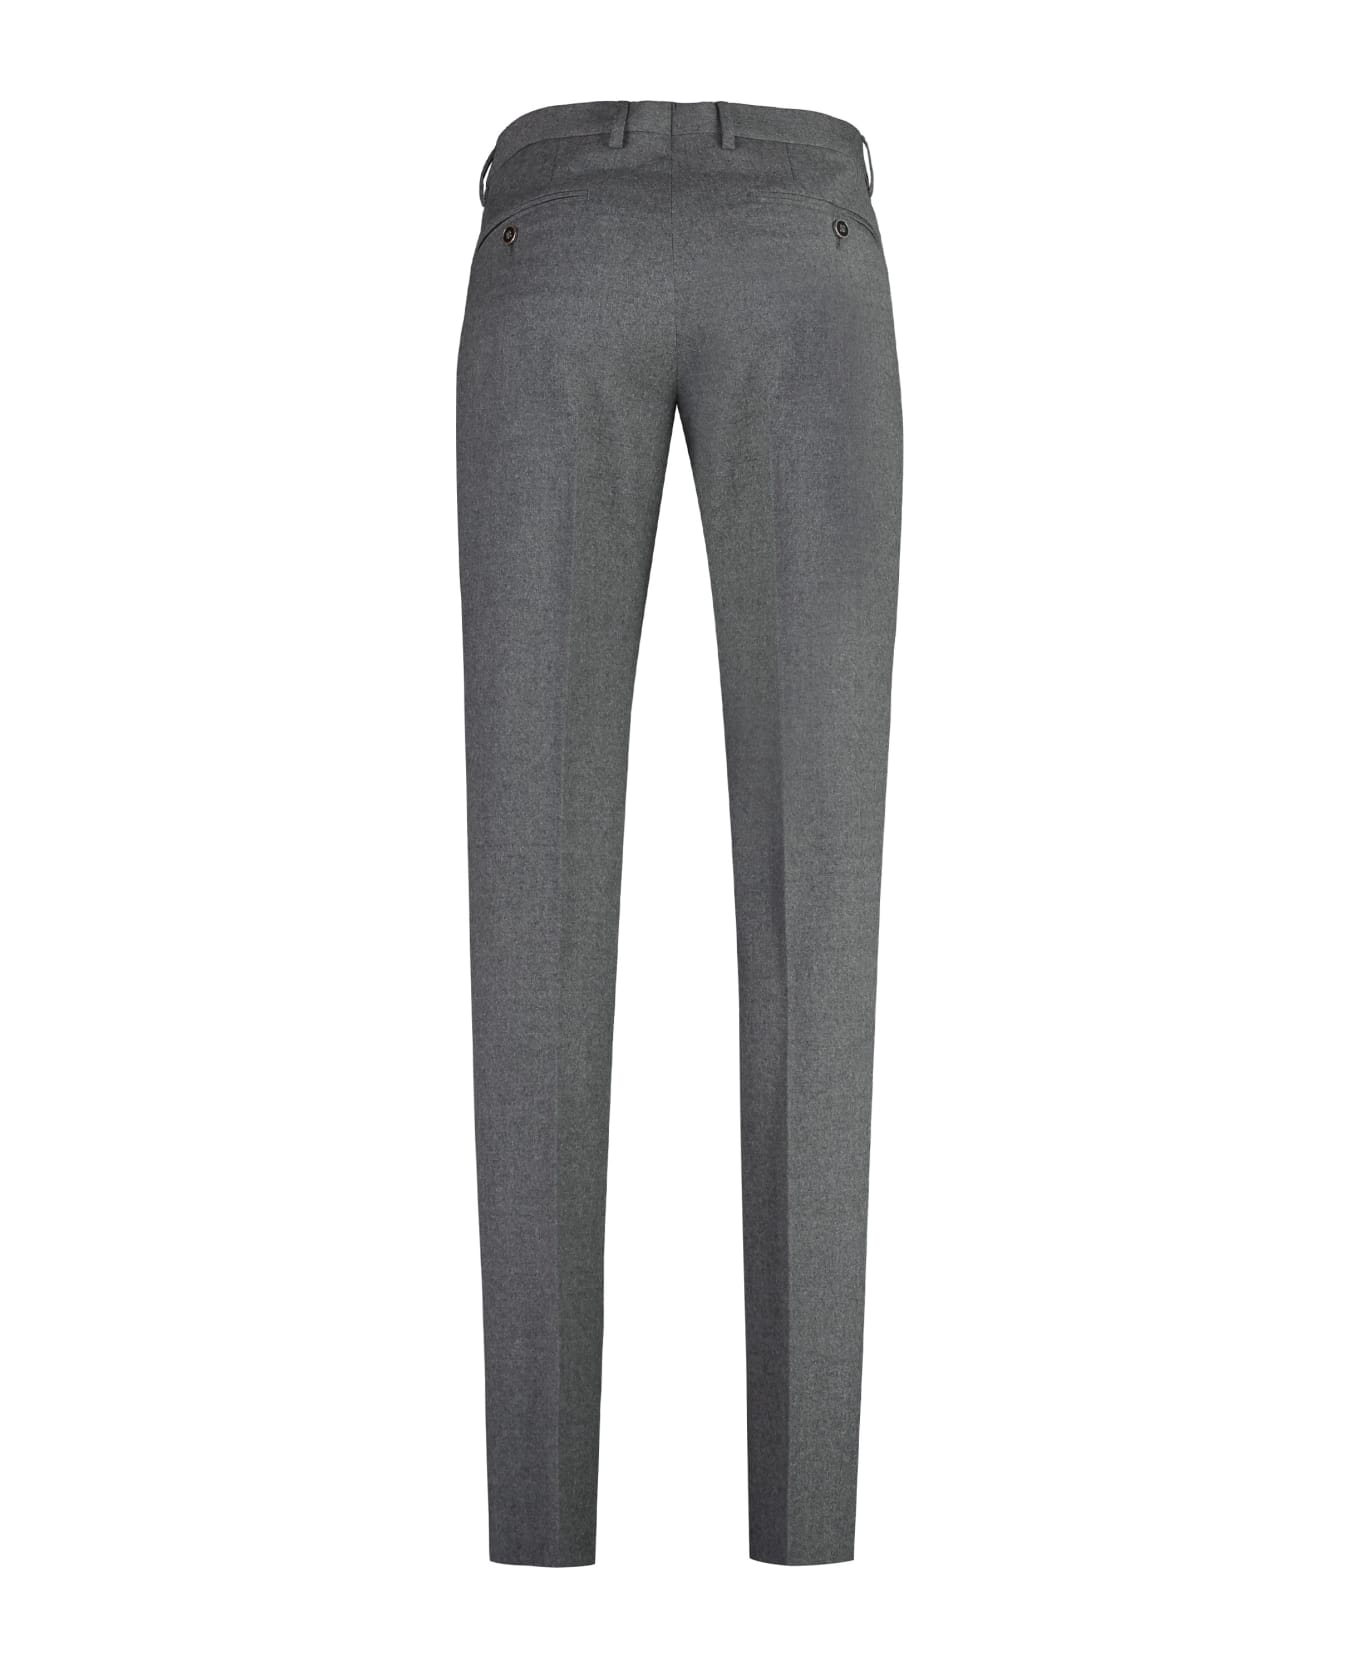 Dolce & Gabbana Wool Trousers - grey